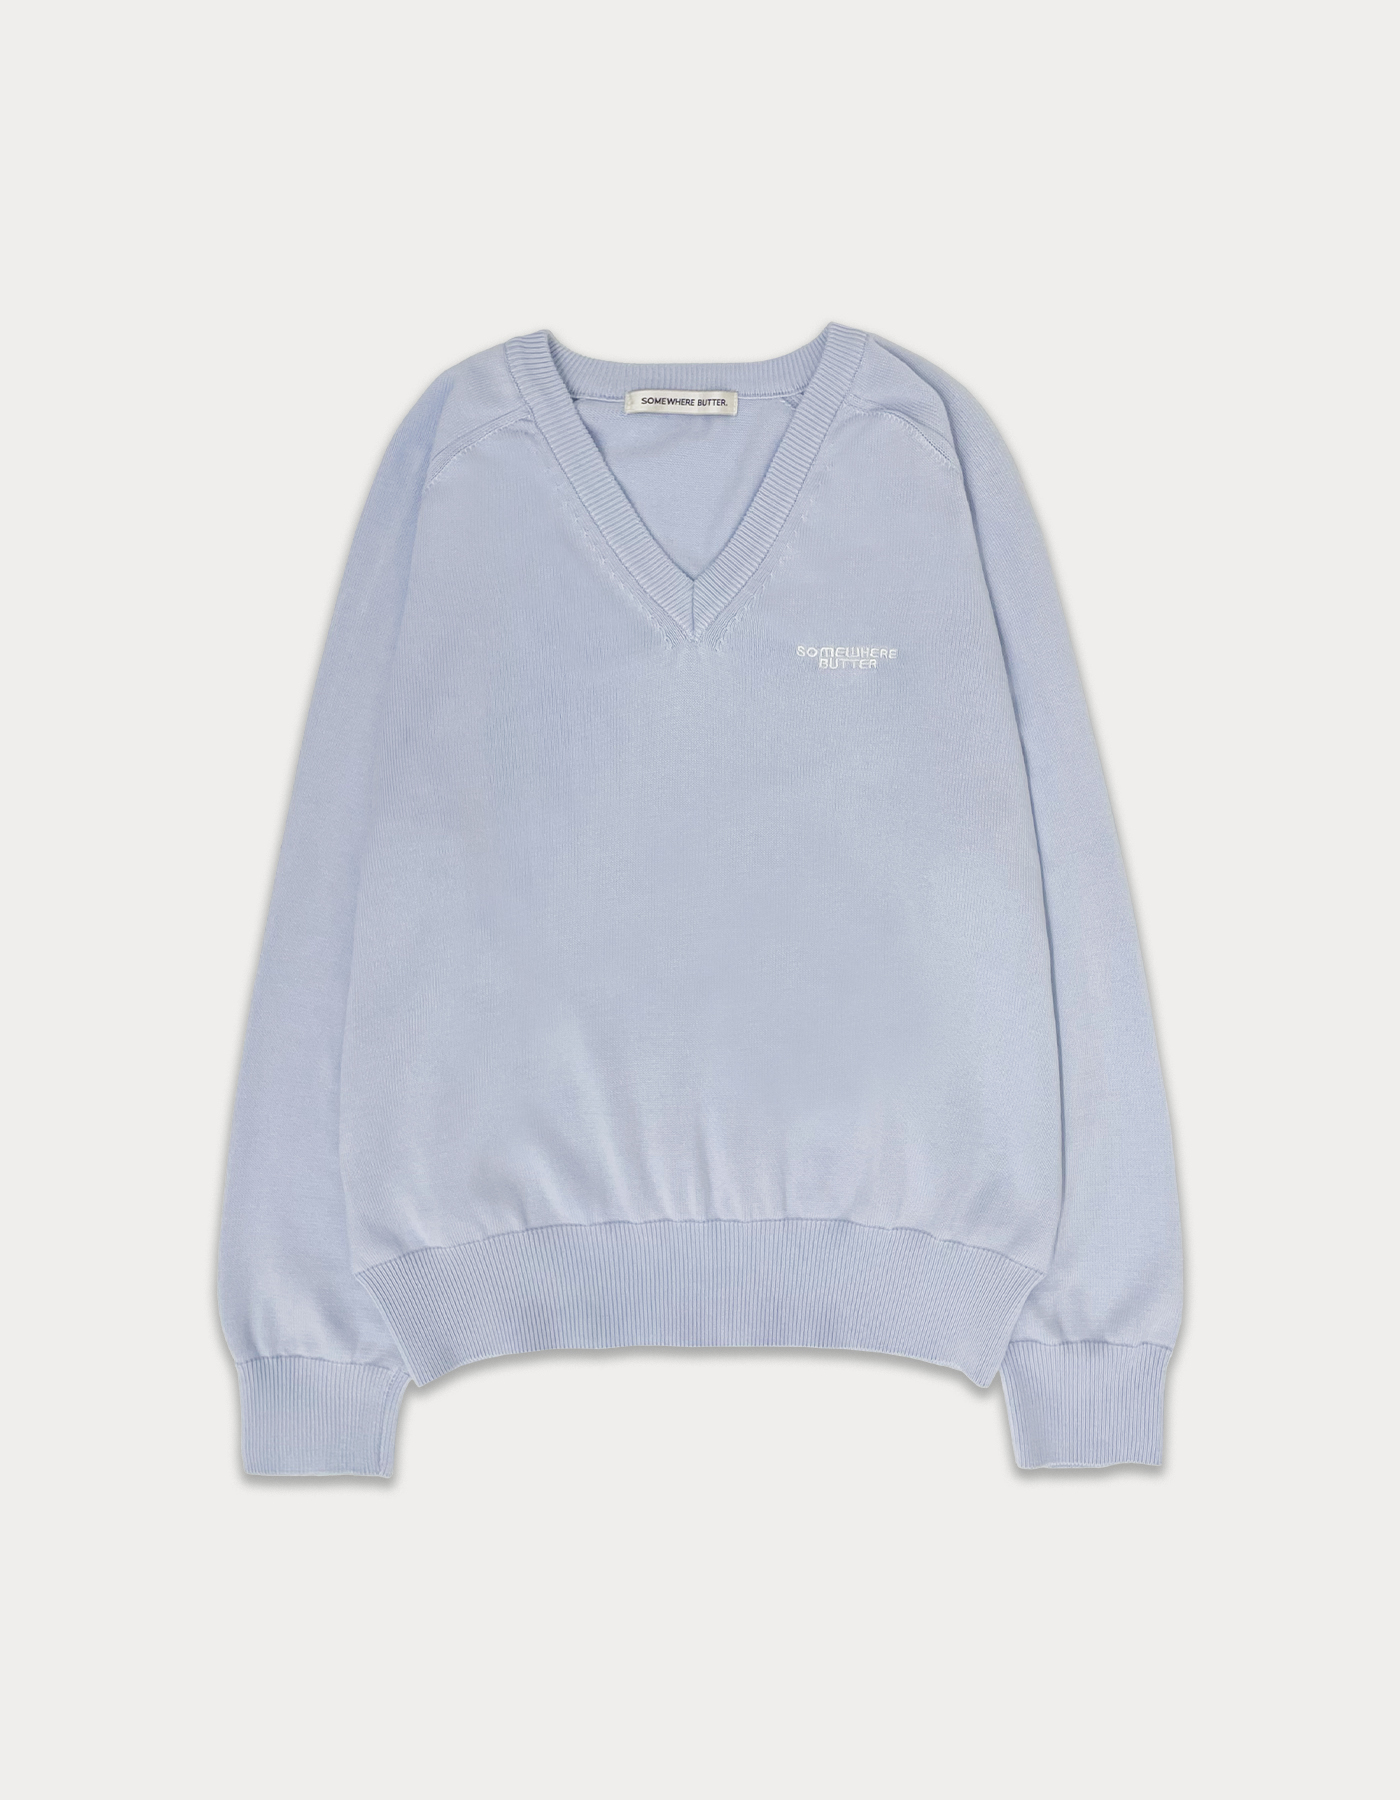 [3rd Order 4.30 출고] Classy logo cotton v-neck knit - light blue